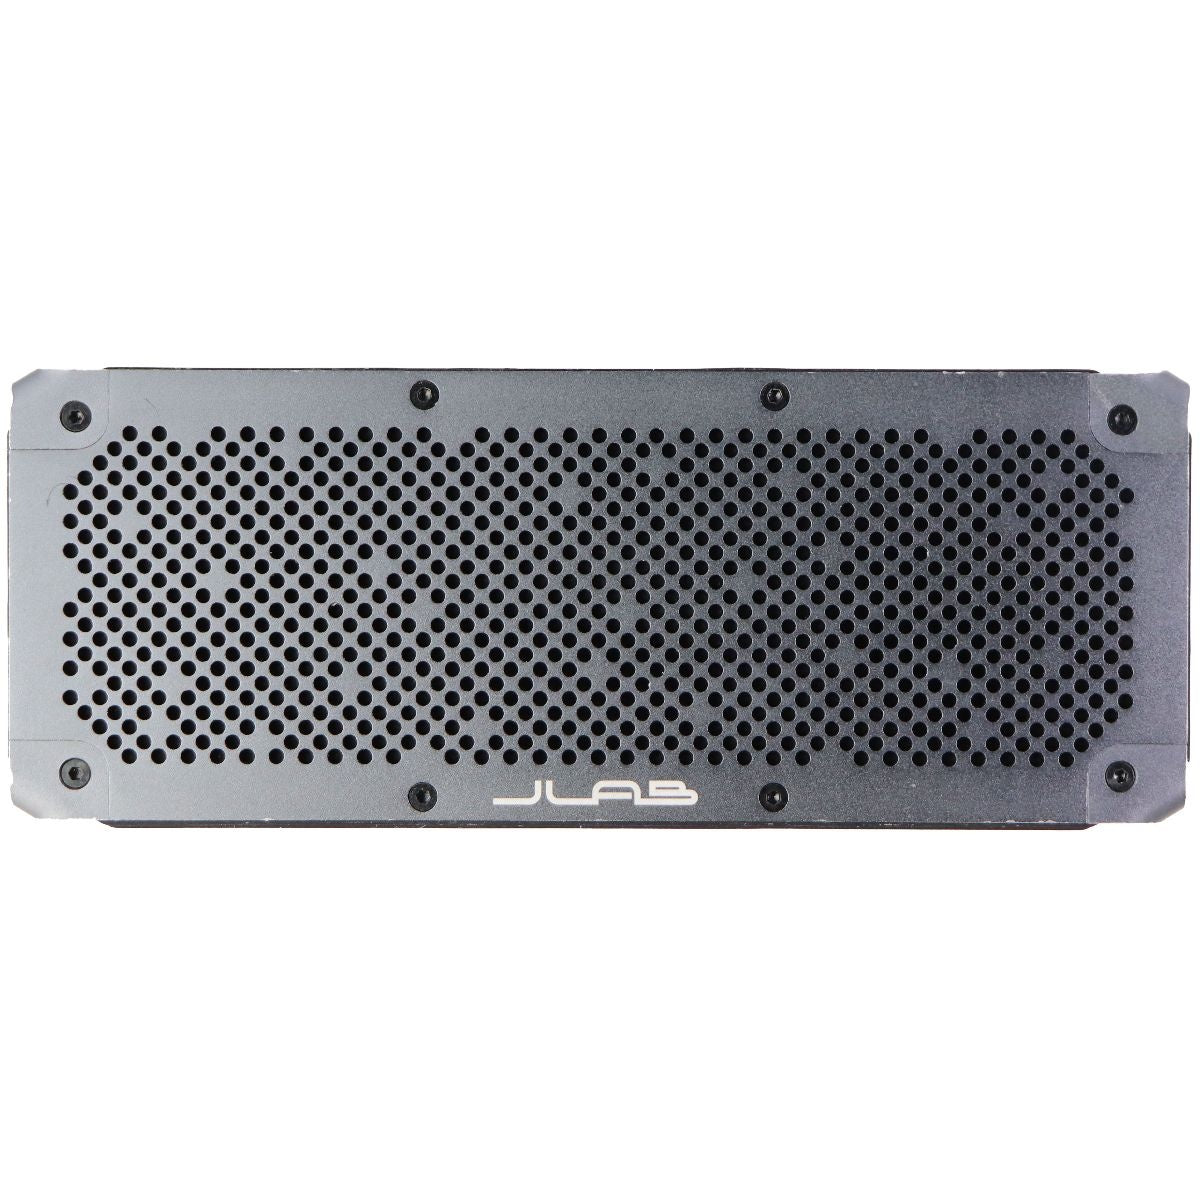 JLab Audio Crasher XL Portable Bluetooth Speaker - Gunmetal / Missing Port Cover Cell Phone - Audio Docks & Speakers JLAB    - Simple Cell Bulk Wholesale Pricing - USA Seller